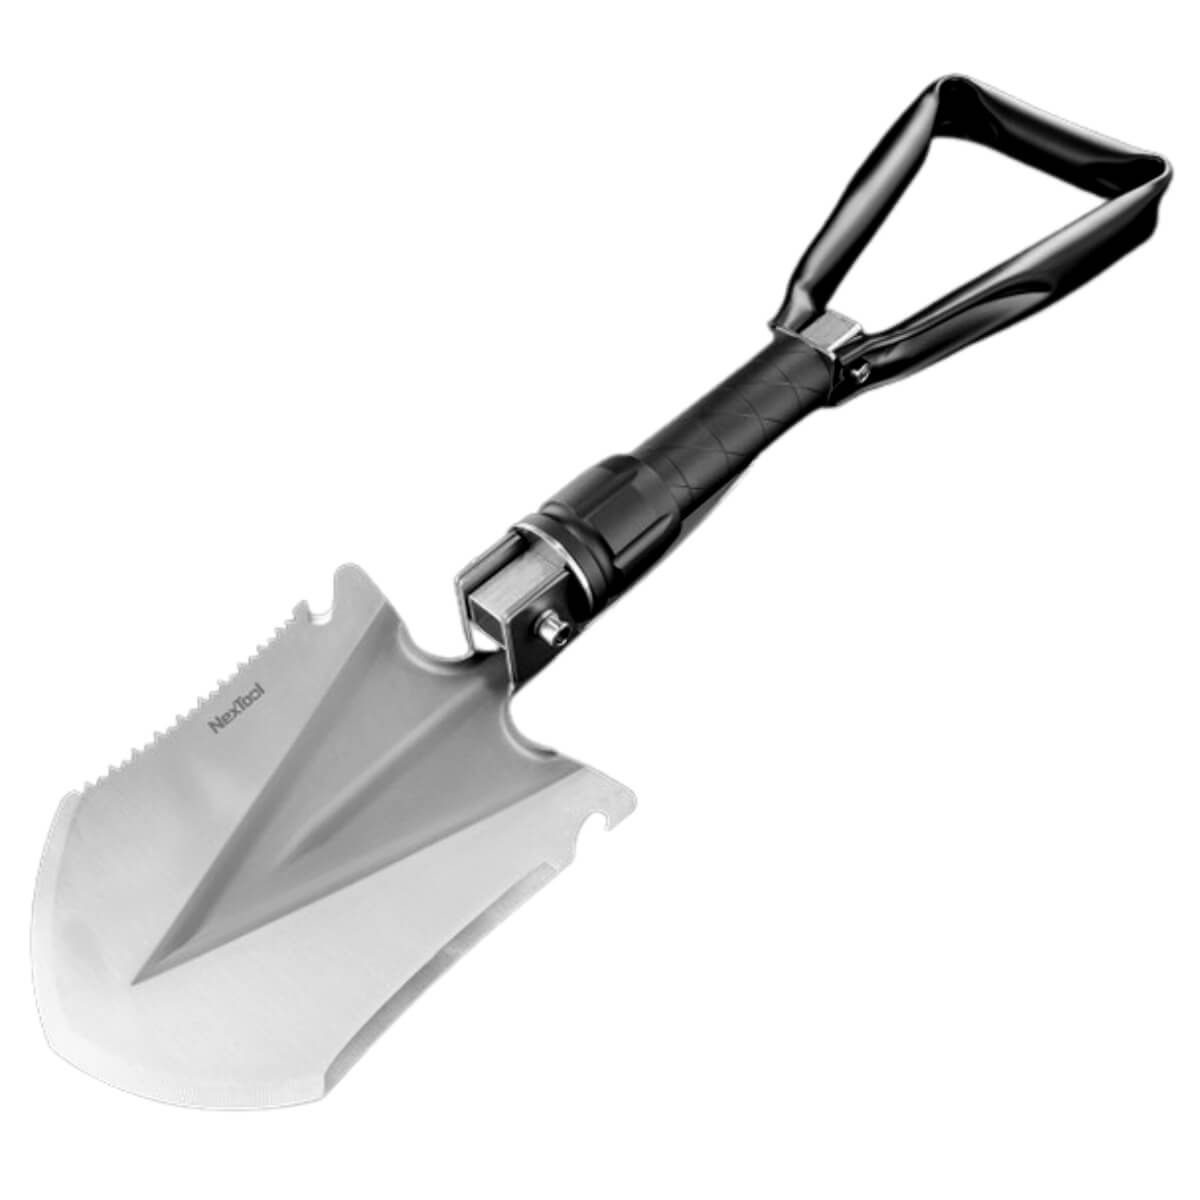 Nextool Folding Shovel